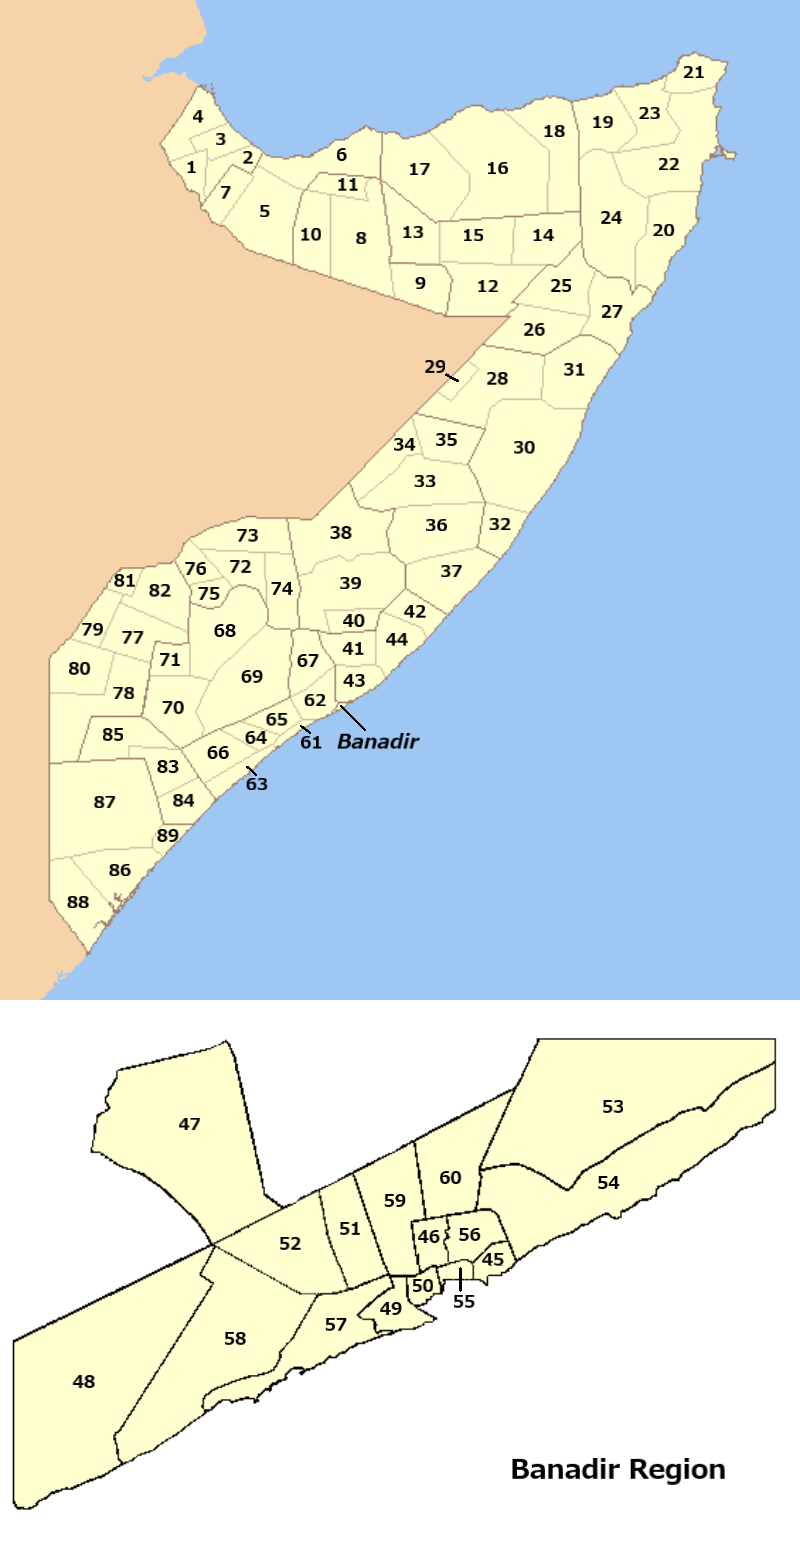 Somalia_and_Banadir_Districts_(numbered).png